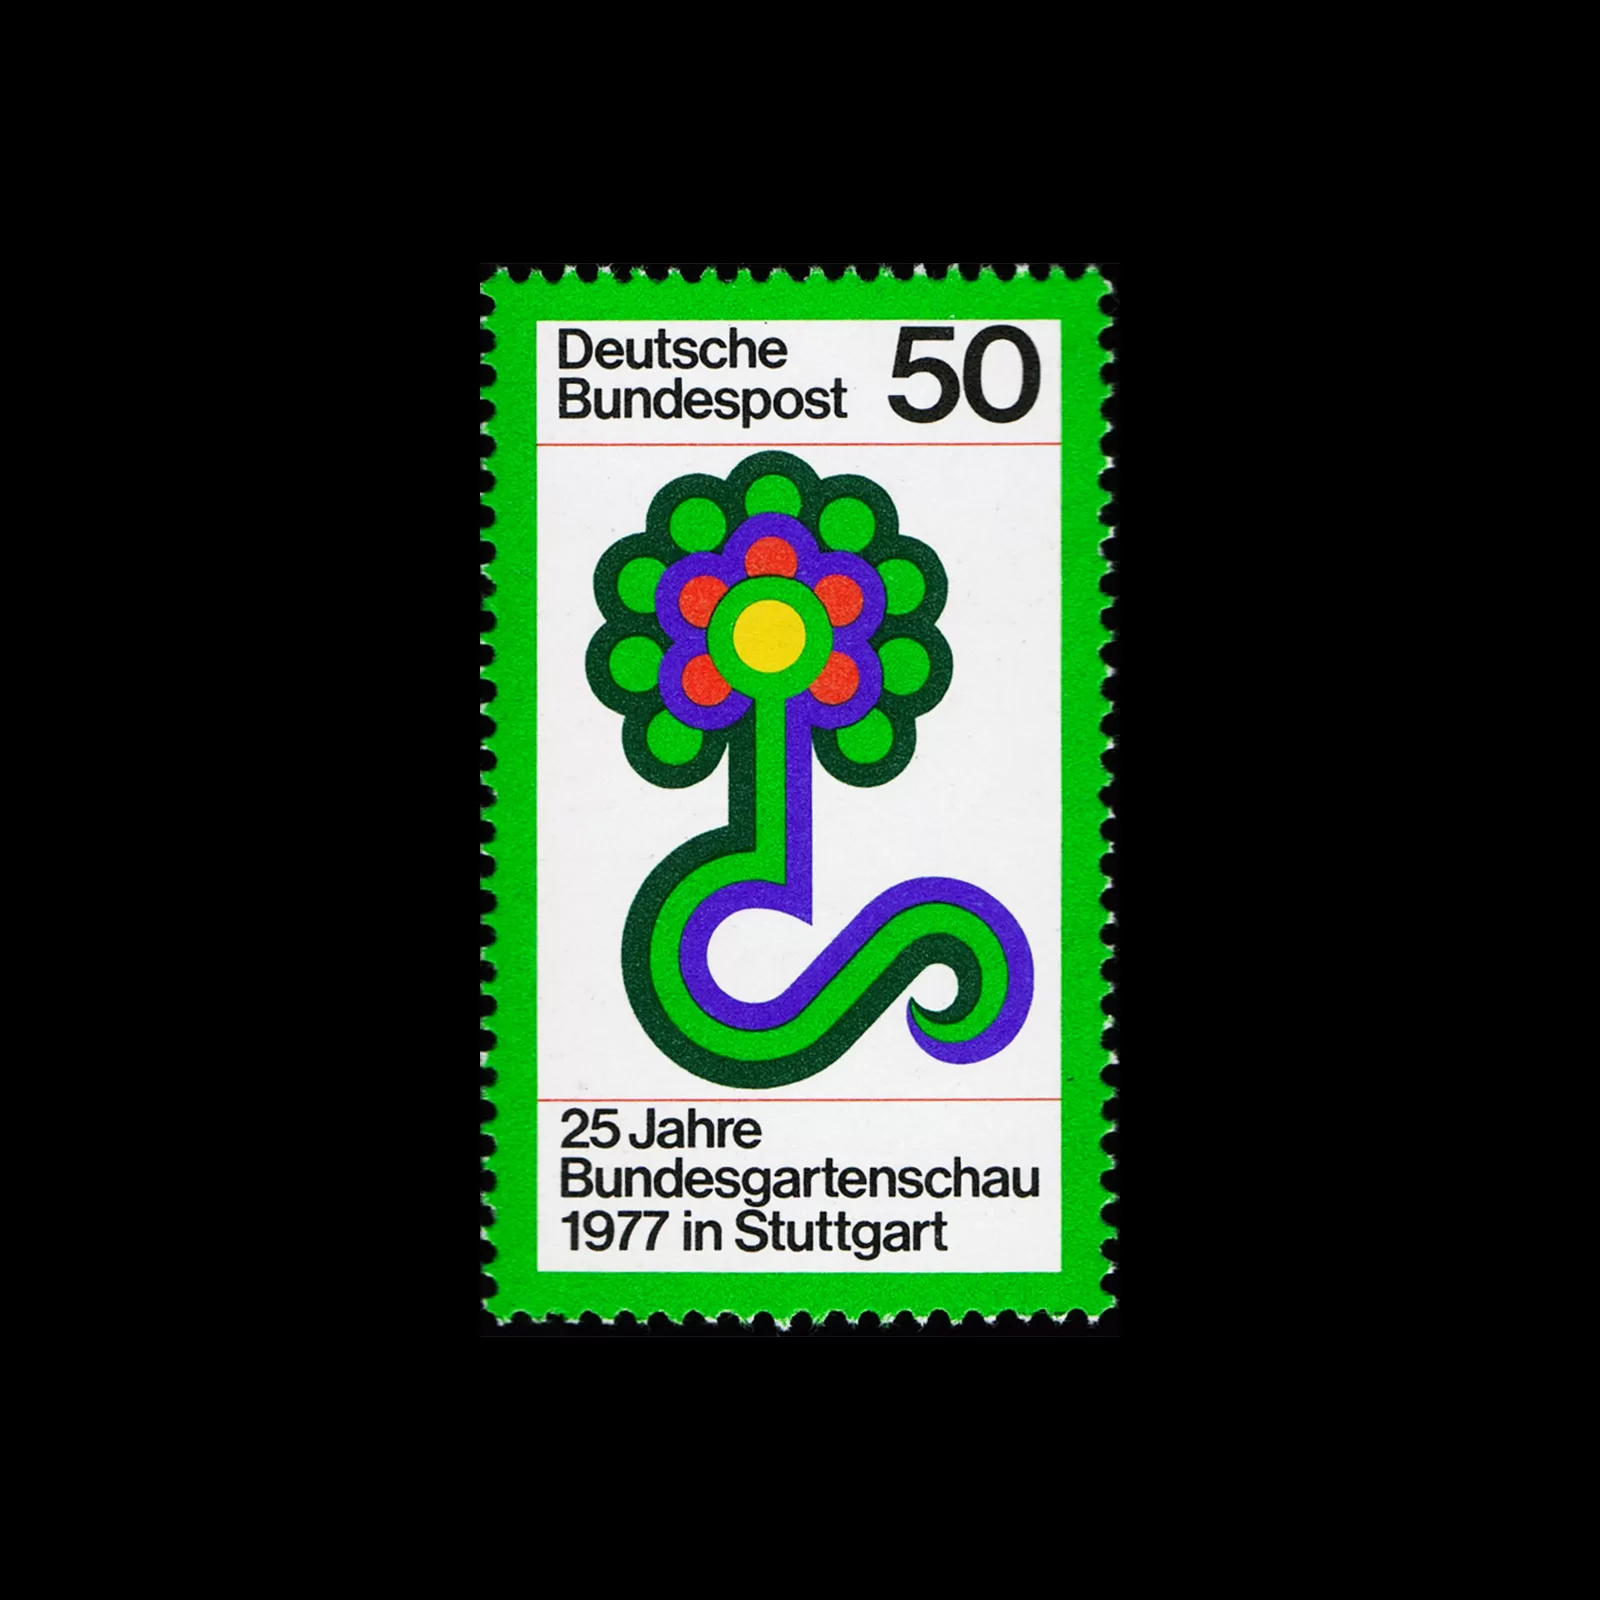 Bundesgartenschau 1977, Germany, Federal Republic Stamp, 1977. Designed by Otto Rieger